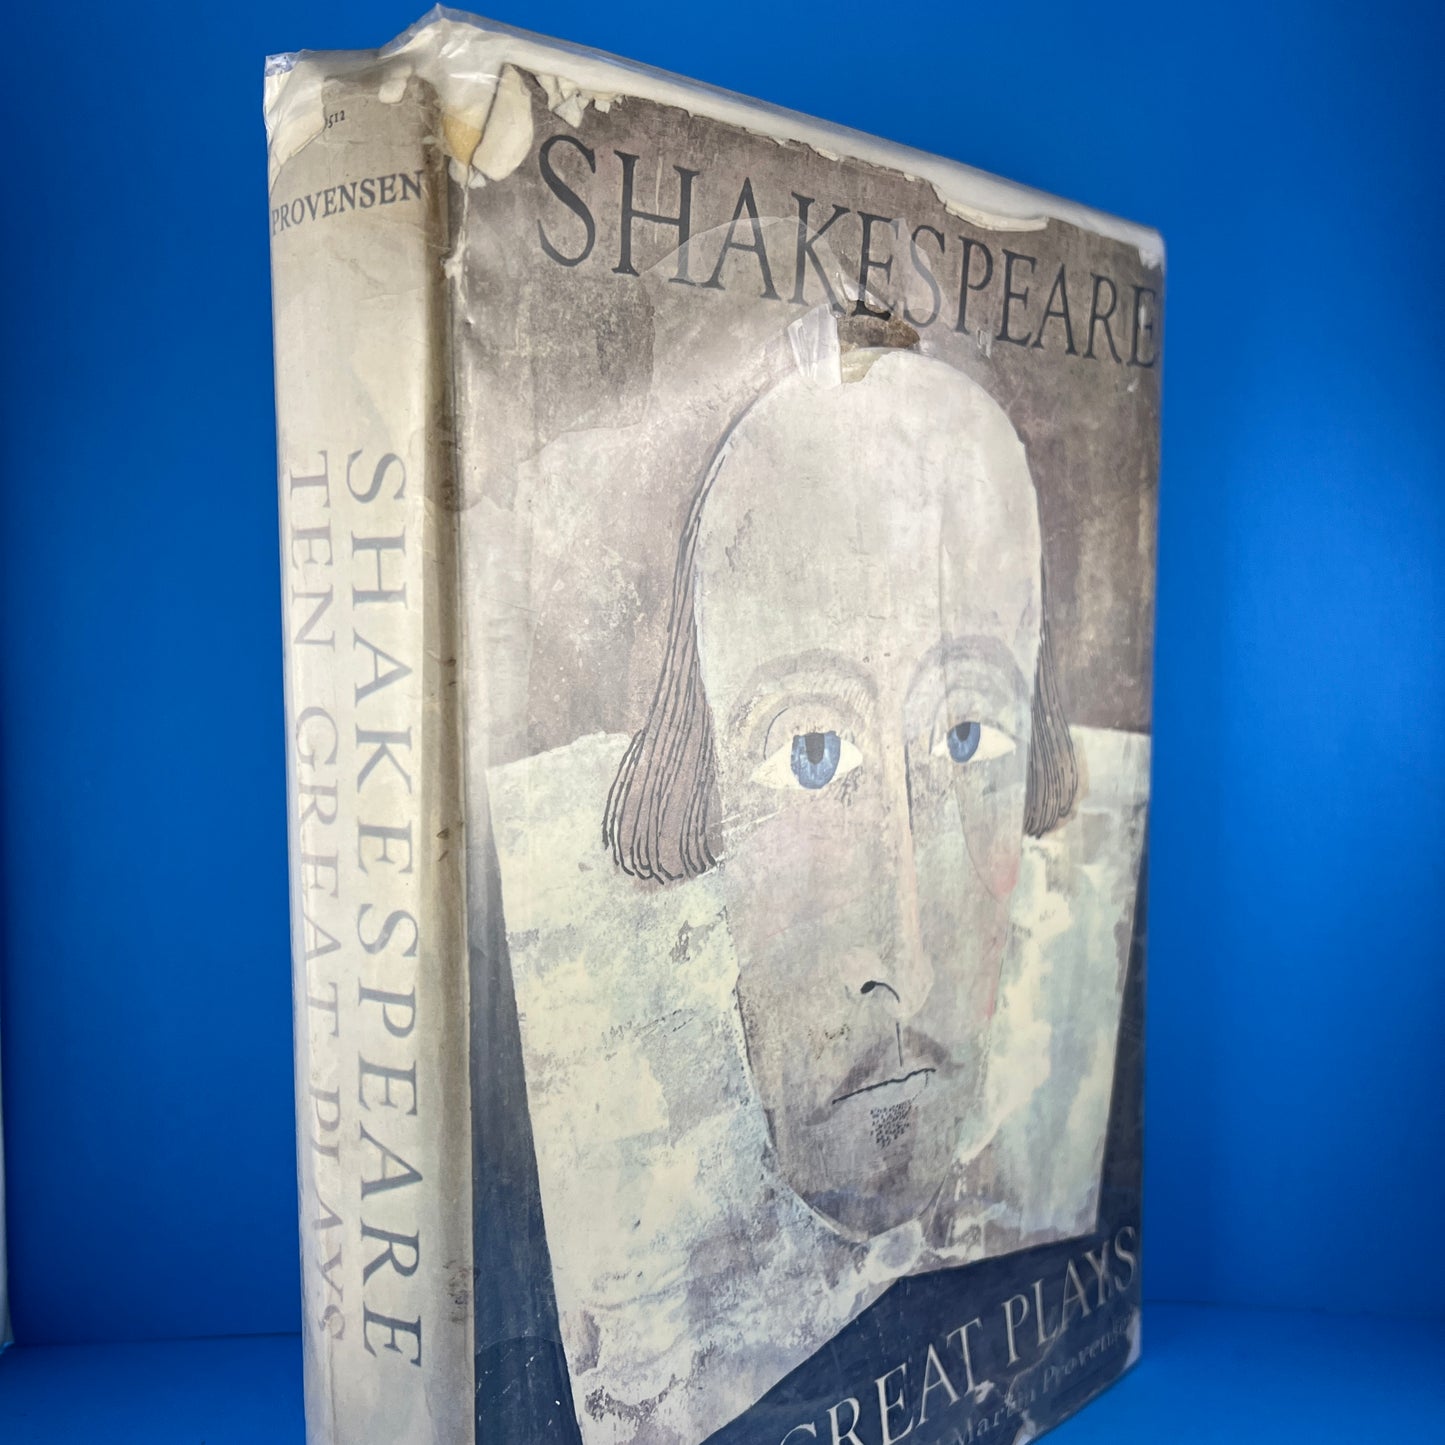 Shakespeare: Ten Great Plays